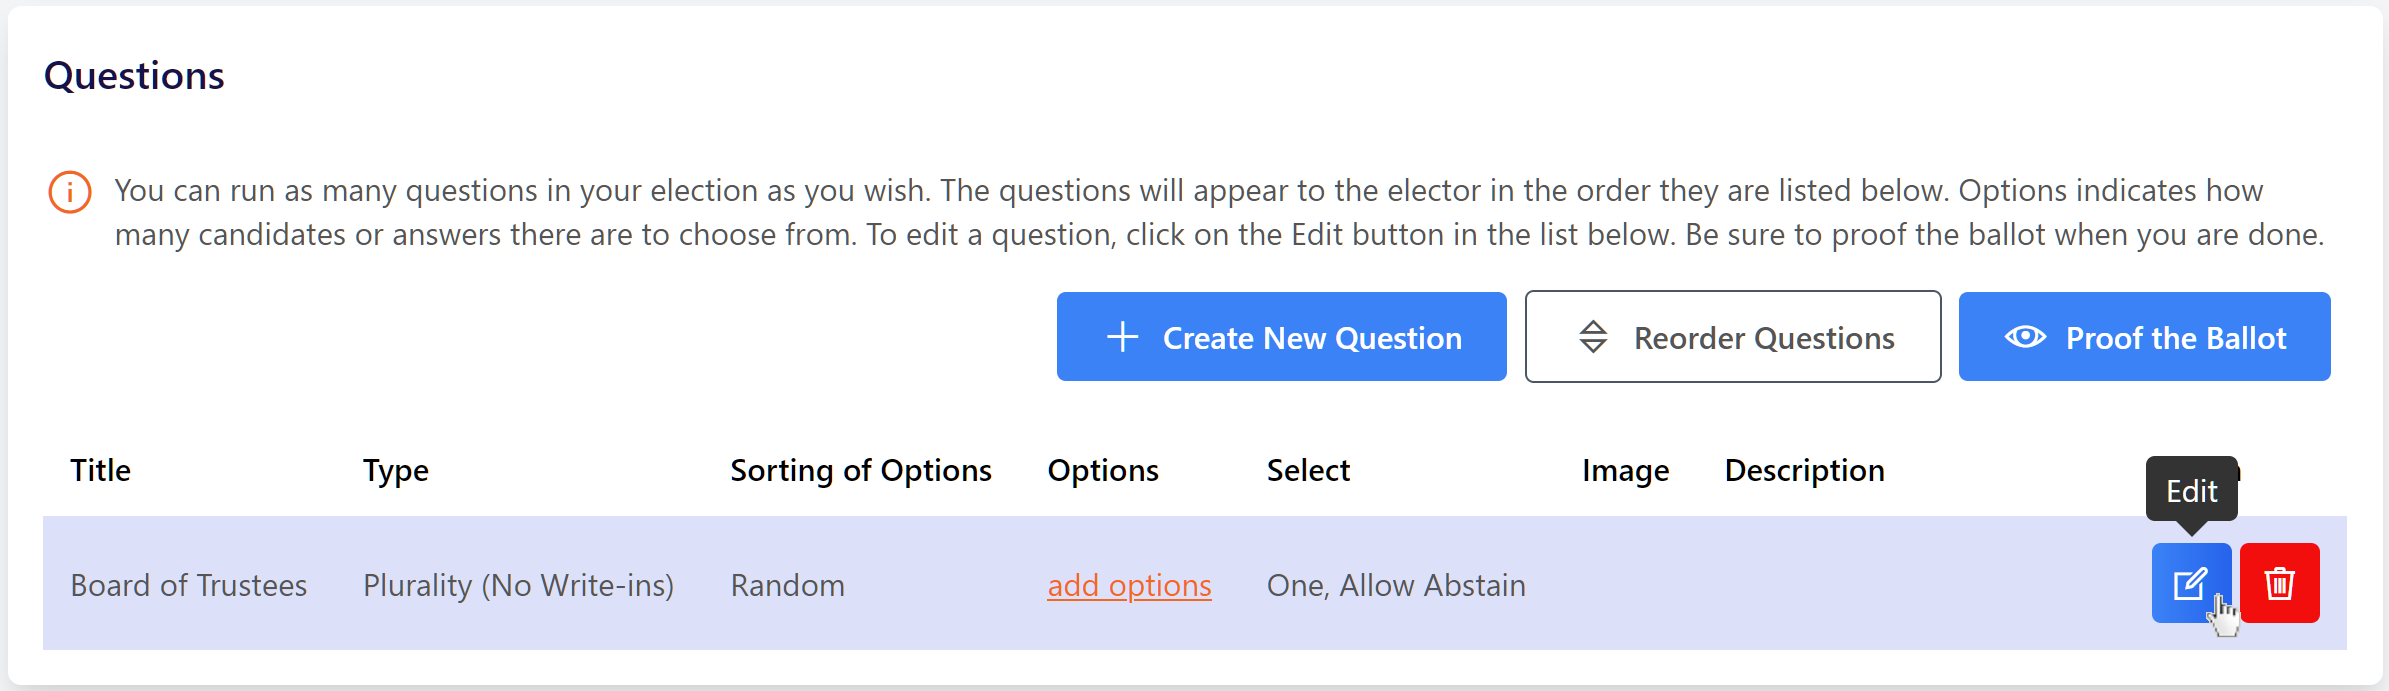 EM_pre_election_edit_question_with_proof_button